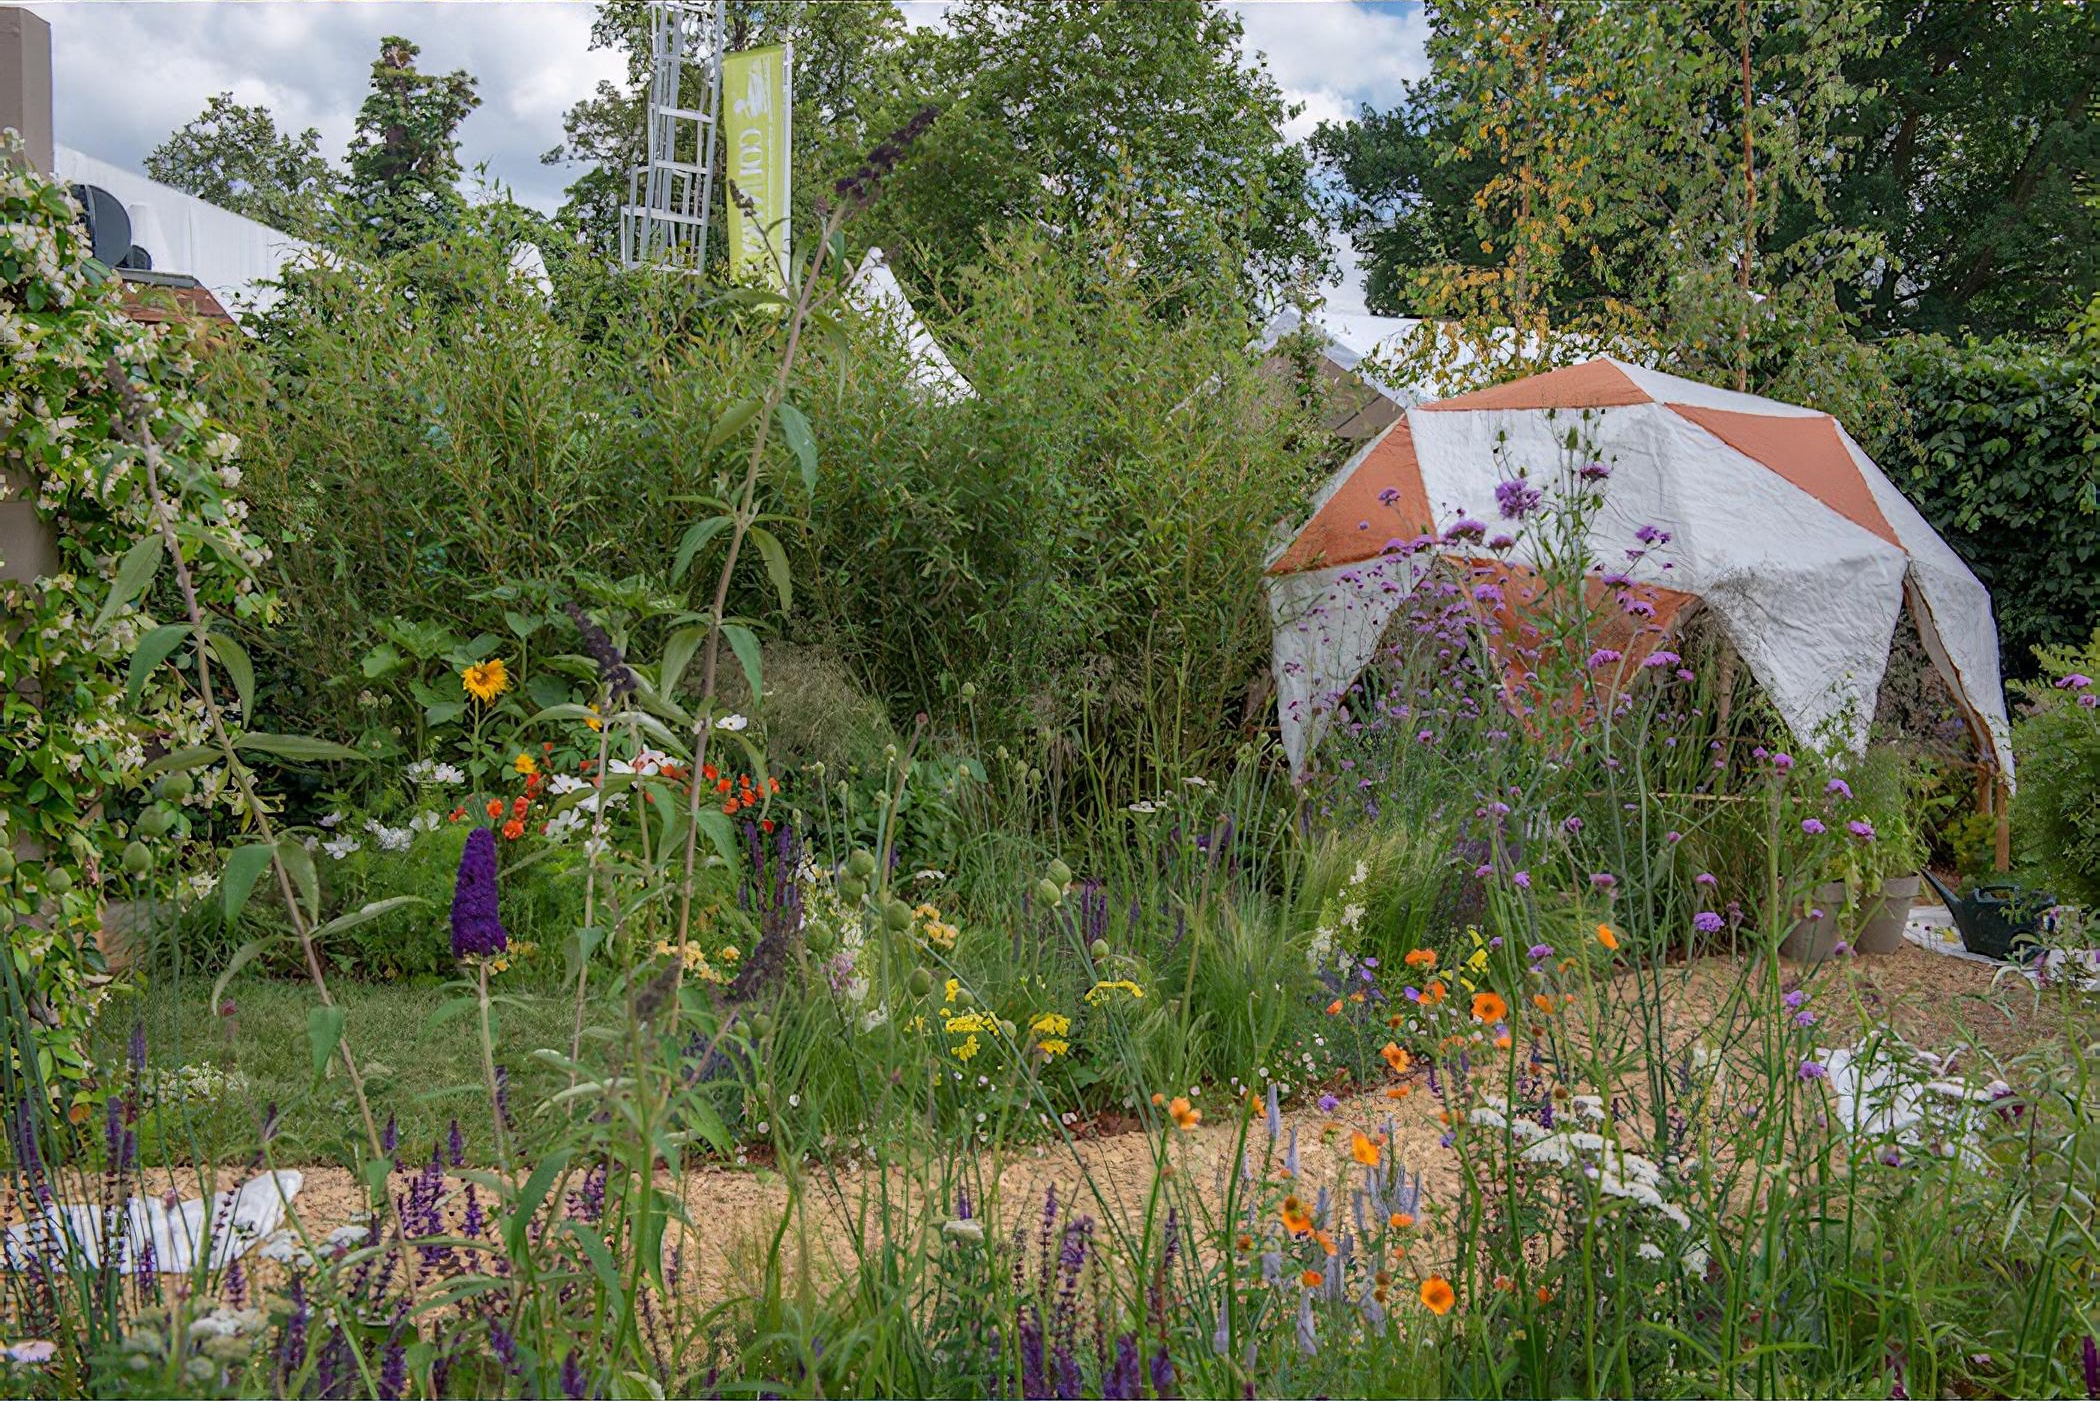 The Year of Green Action Garden RHS Hampton Court Flower Show 2019 by Helen J Rosevear and Jane Stoneham garden designers